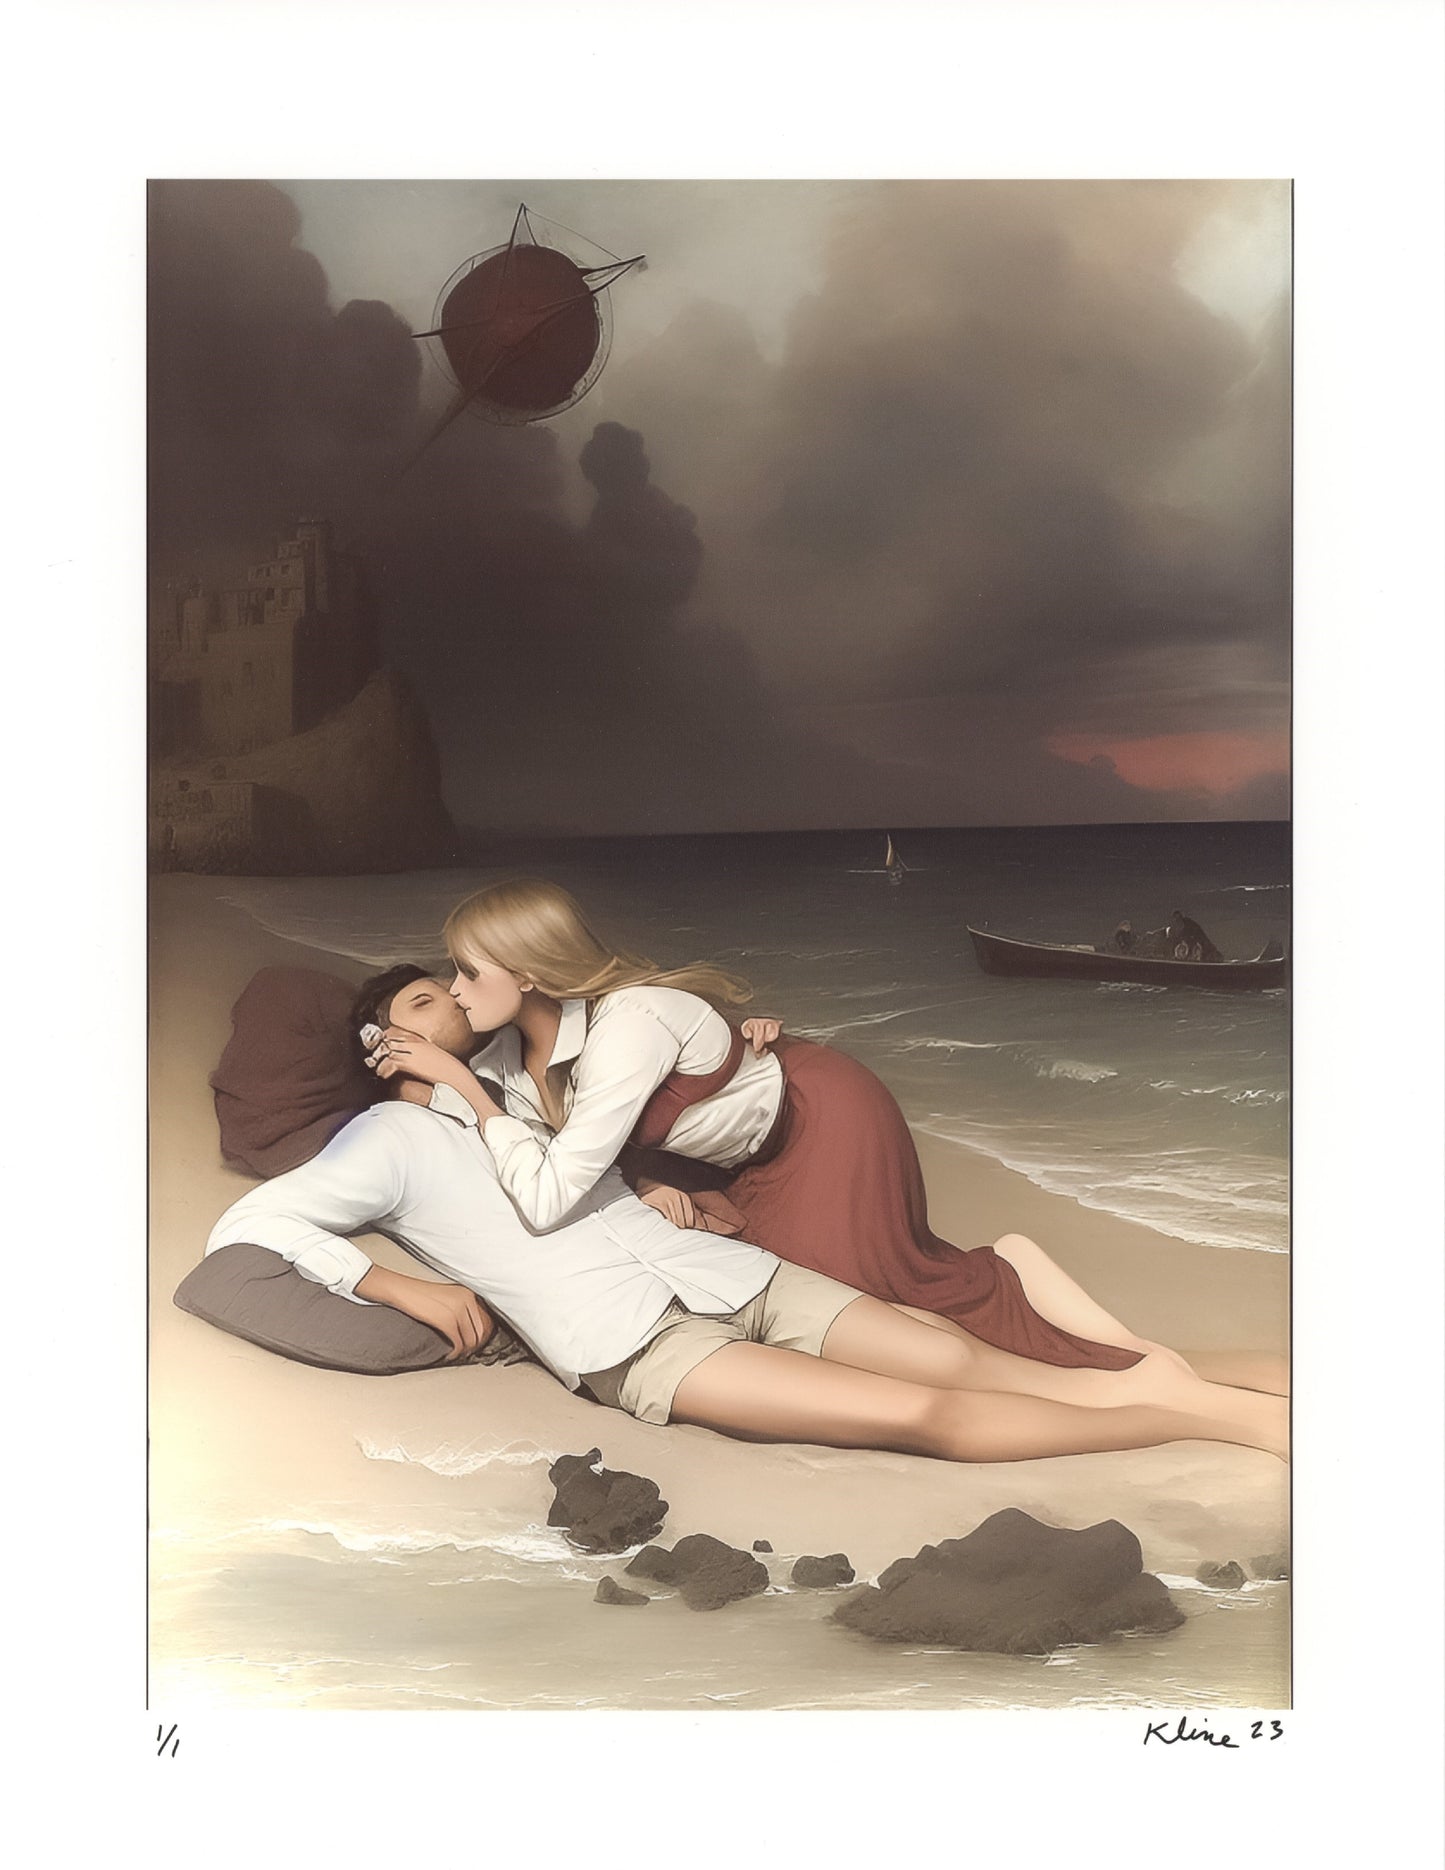 Their Love Parted. Digital Art Print. 8.5" x 11". 1/1 Edition. John Kline Artwork